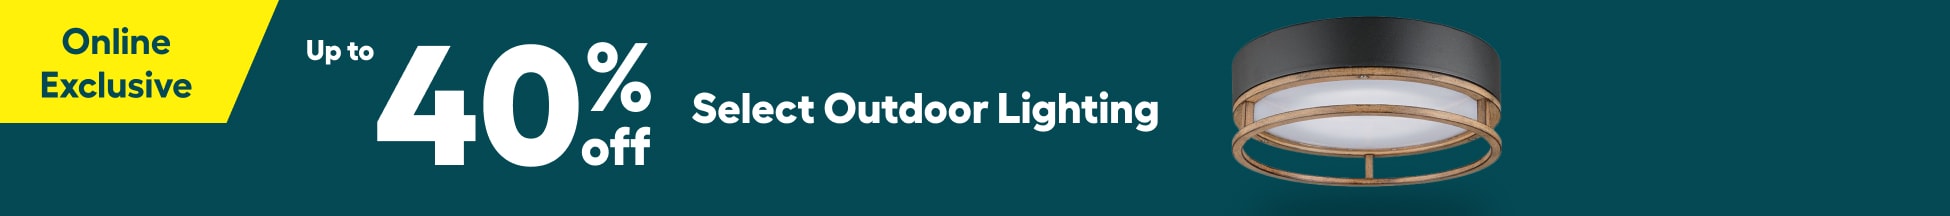 Outdoor lighting promo